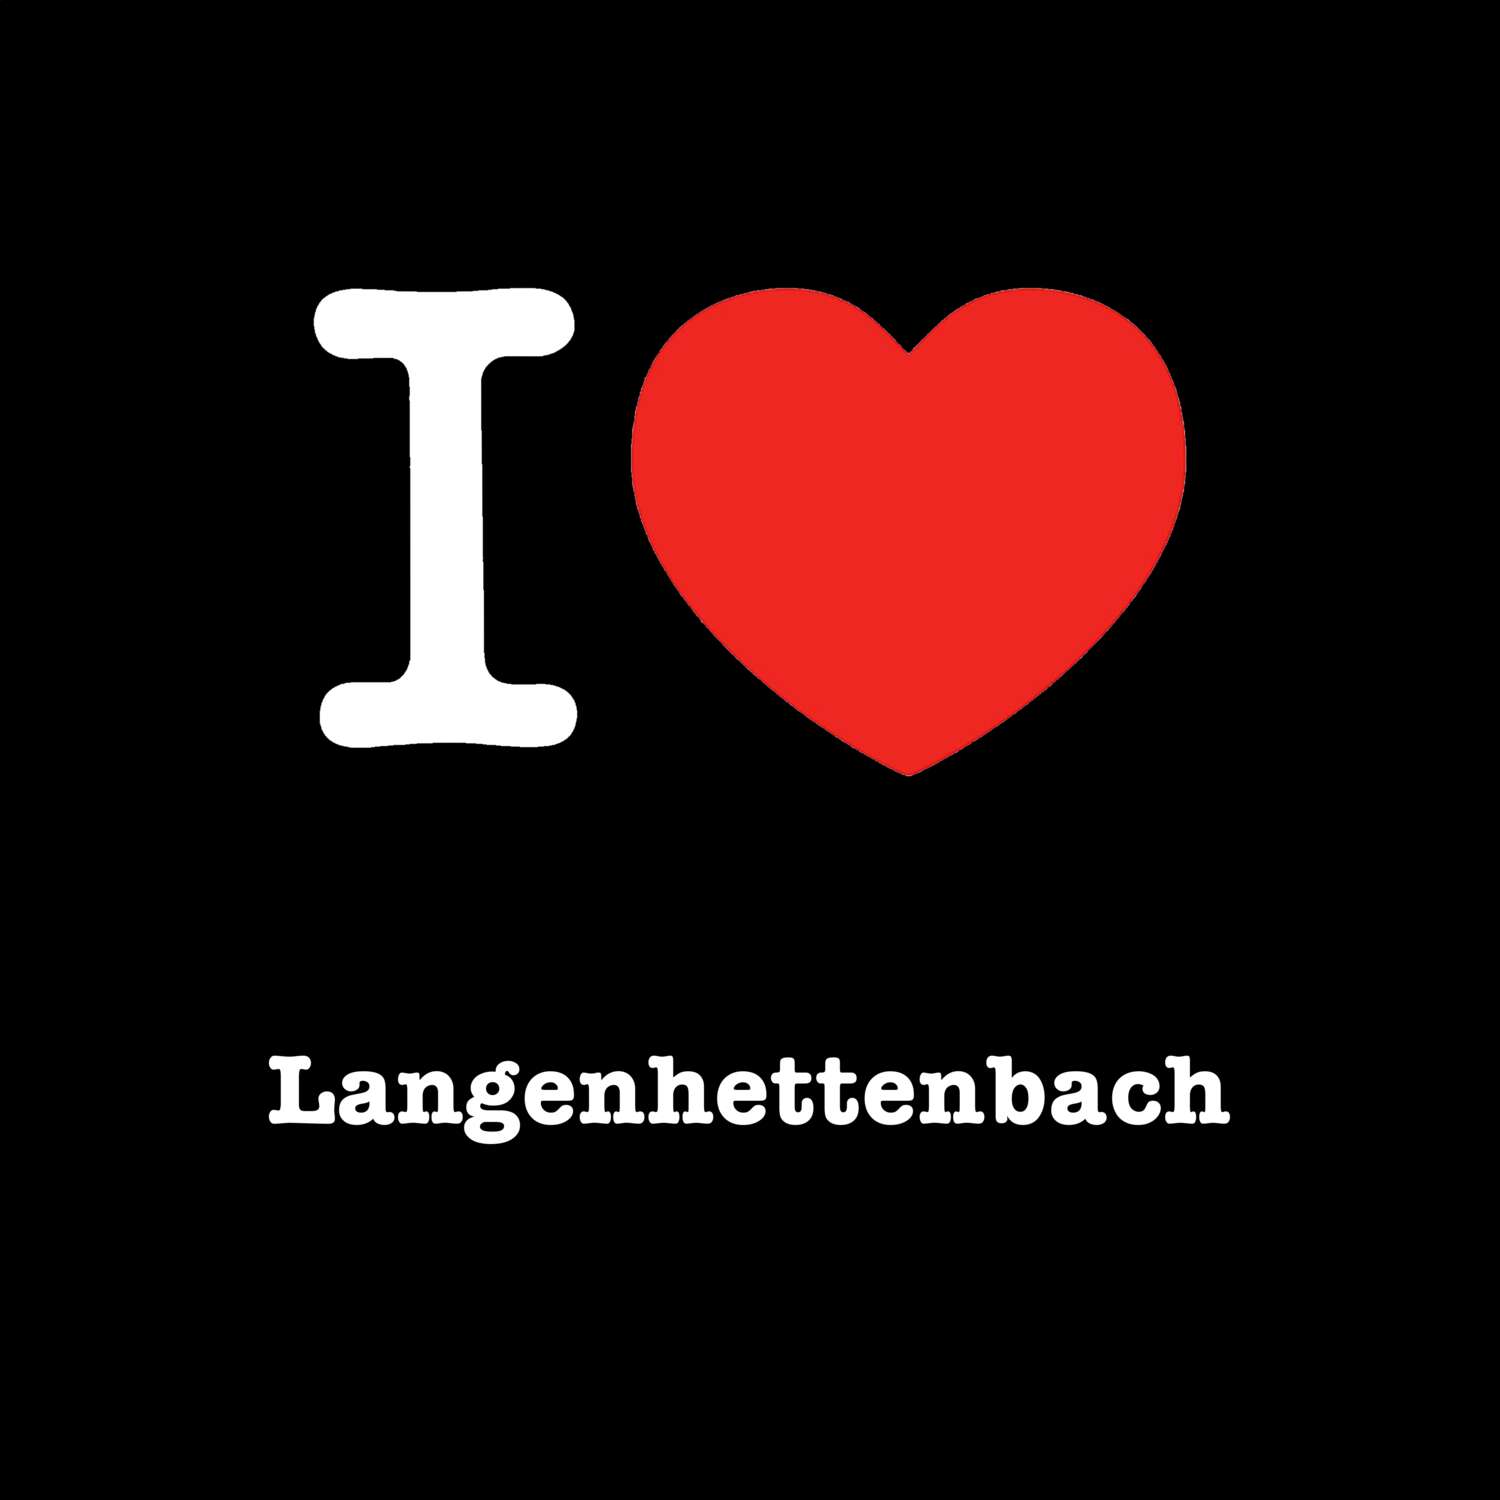 Langenhettenbach T-Shirt »I love«